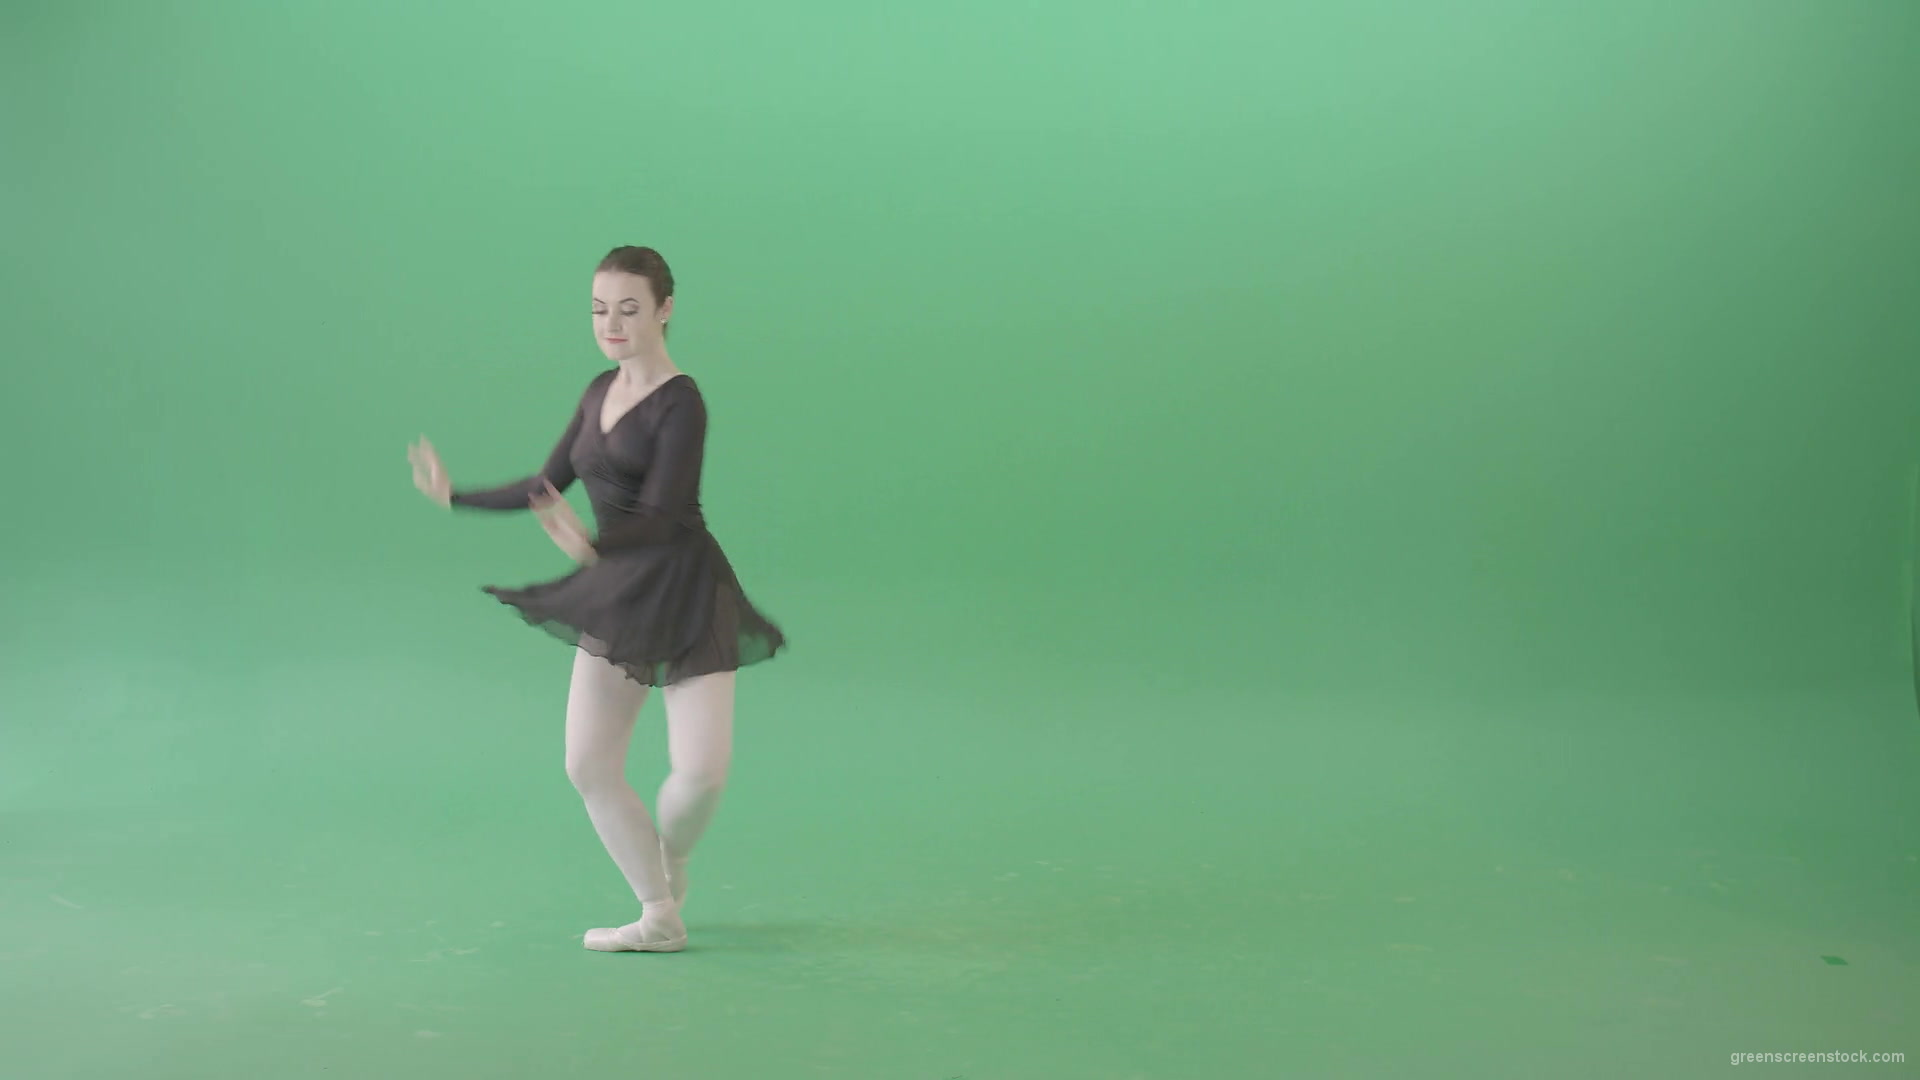 Russian-ballet-dancing-girl-in-black-body-wear-dress-dancing-isolated-on-green-screen-4K-Video-Footage-1920_006 Green Screen Stock